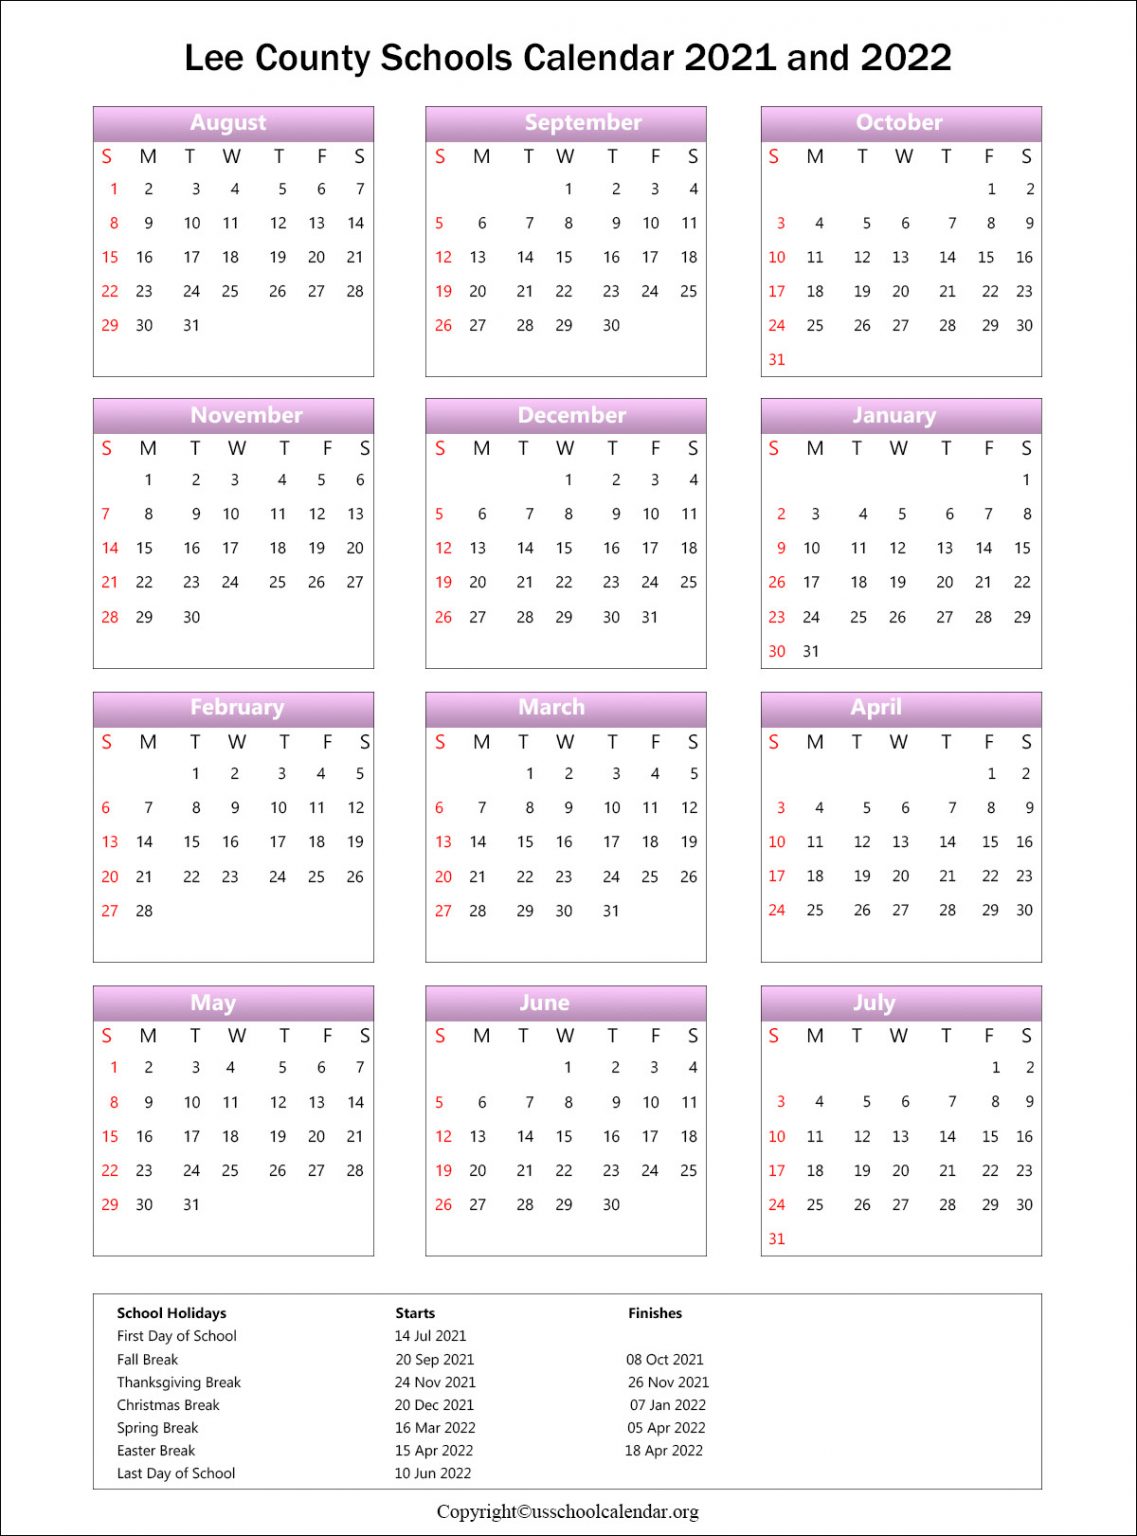 Lee County School Calendar With Holidays 2021 2022